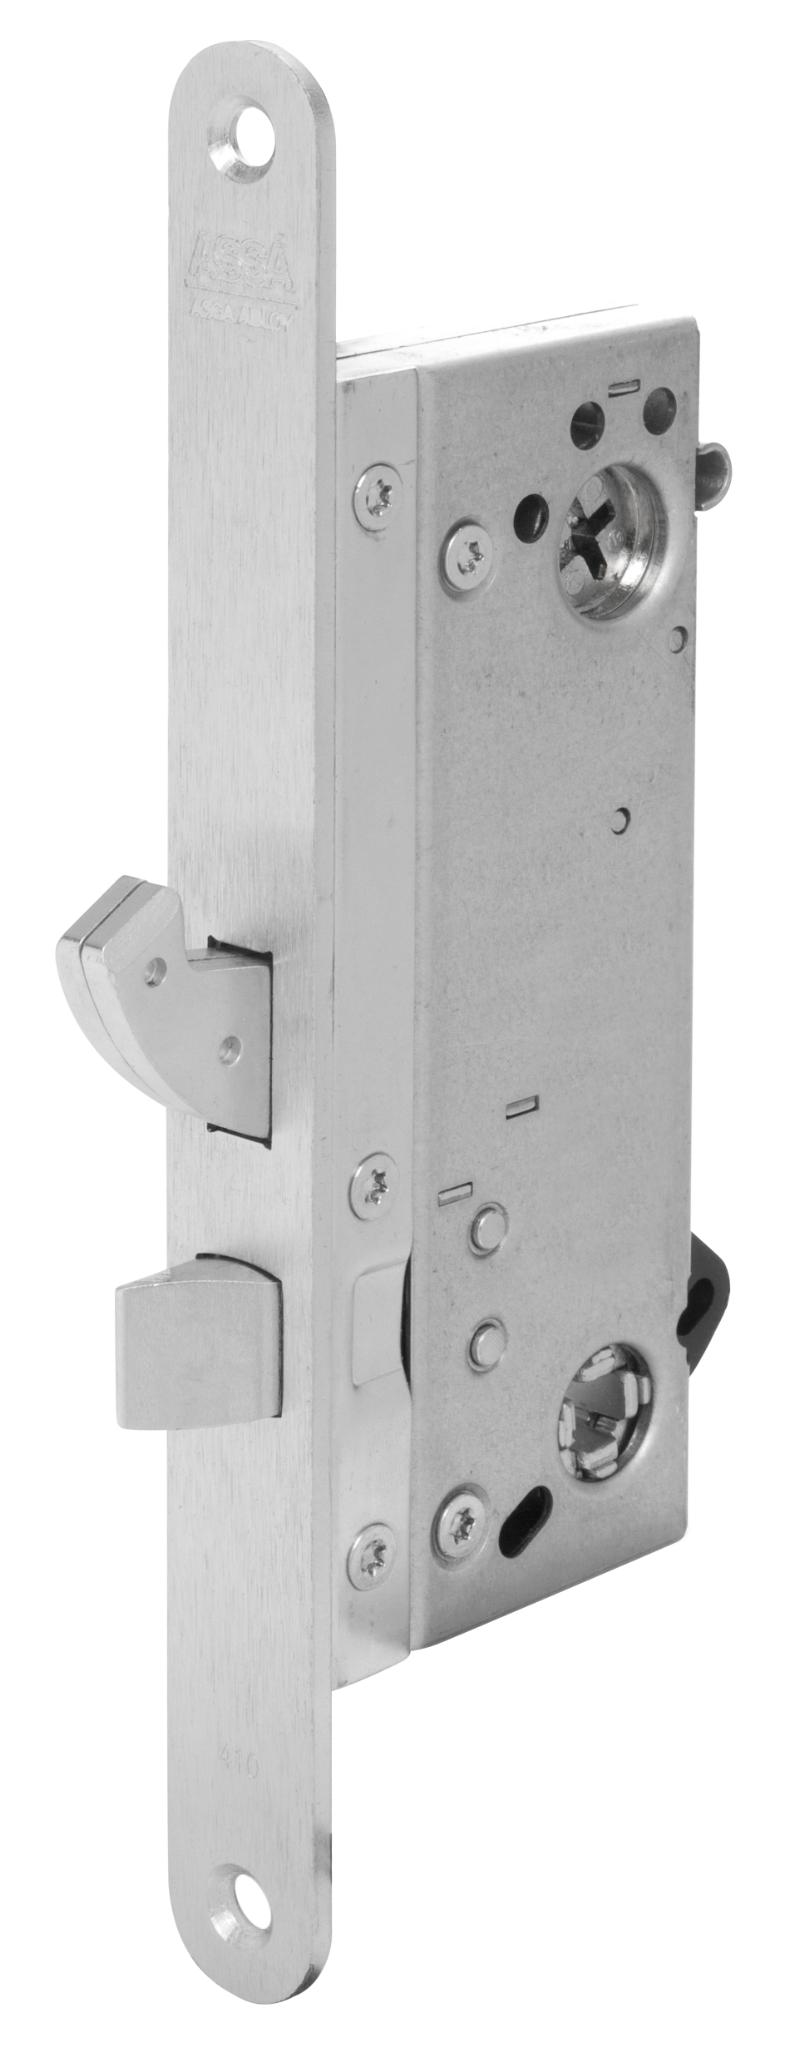 Assa lock box Connect 410